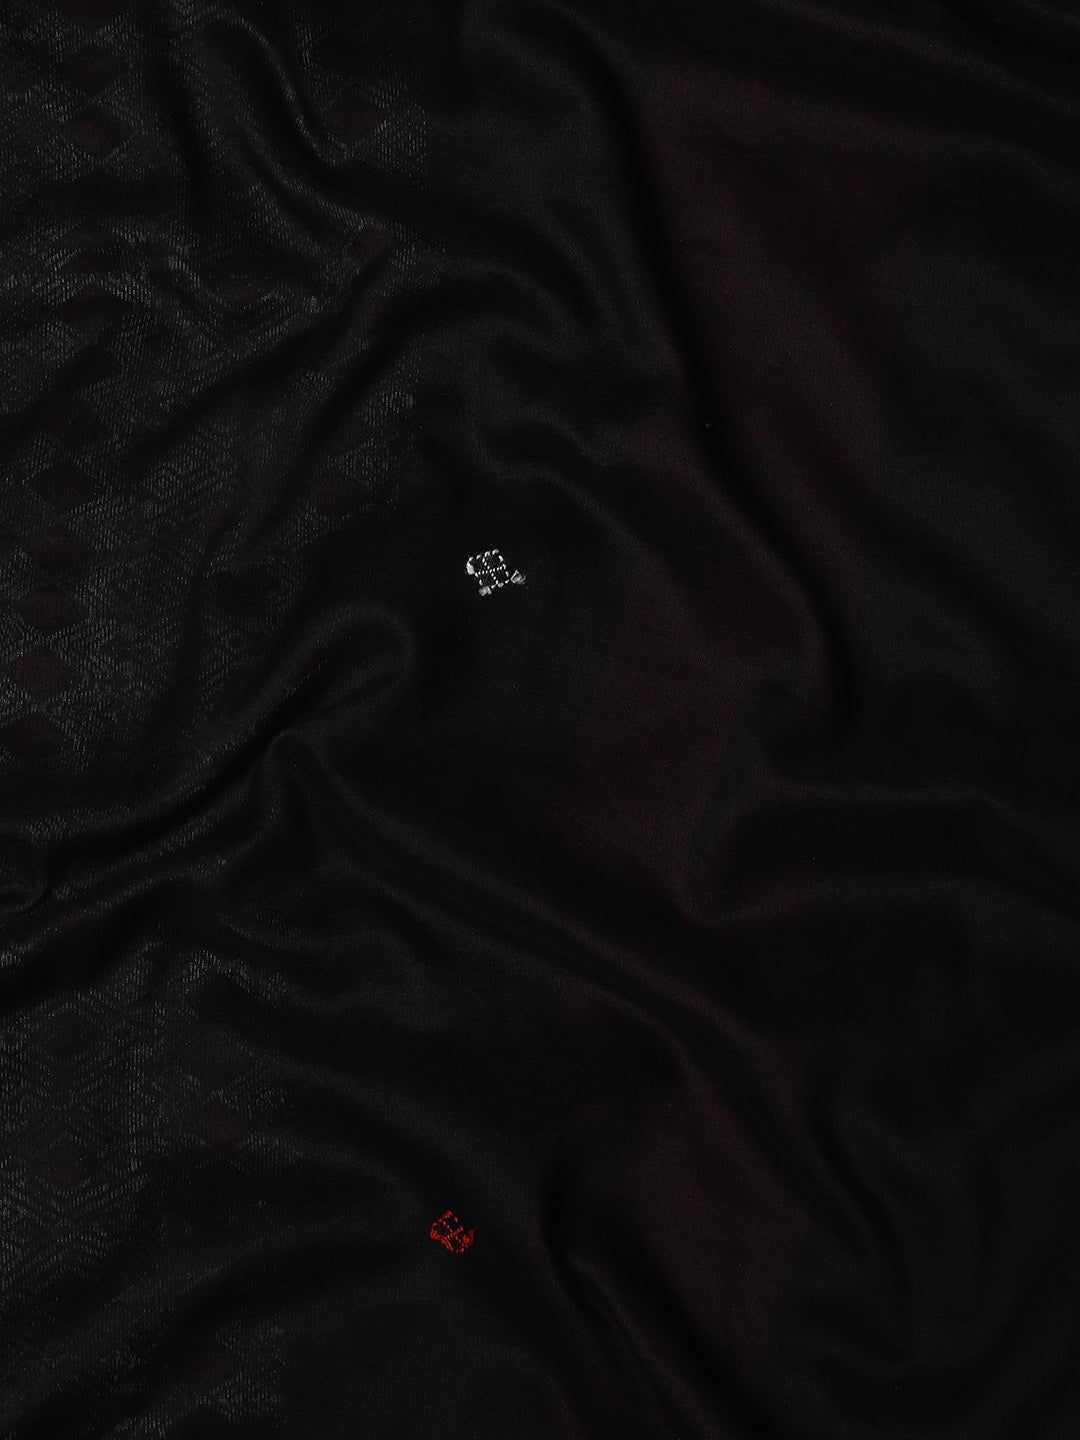 Black Red Assamese Cotton  Saree with pompoms